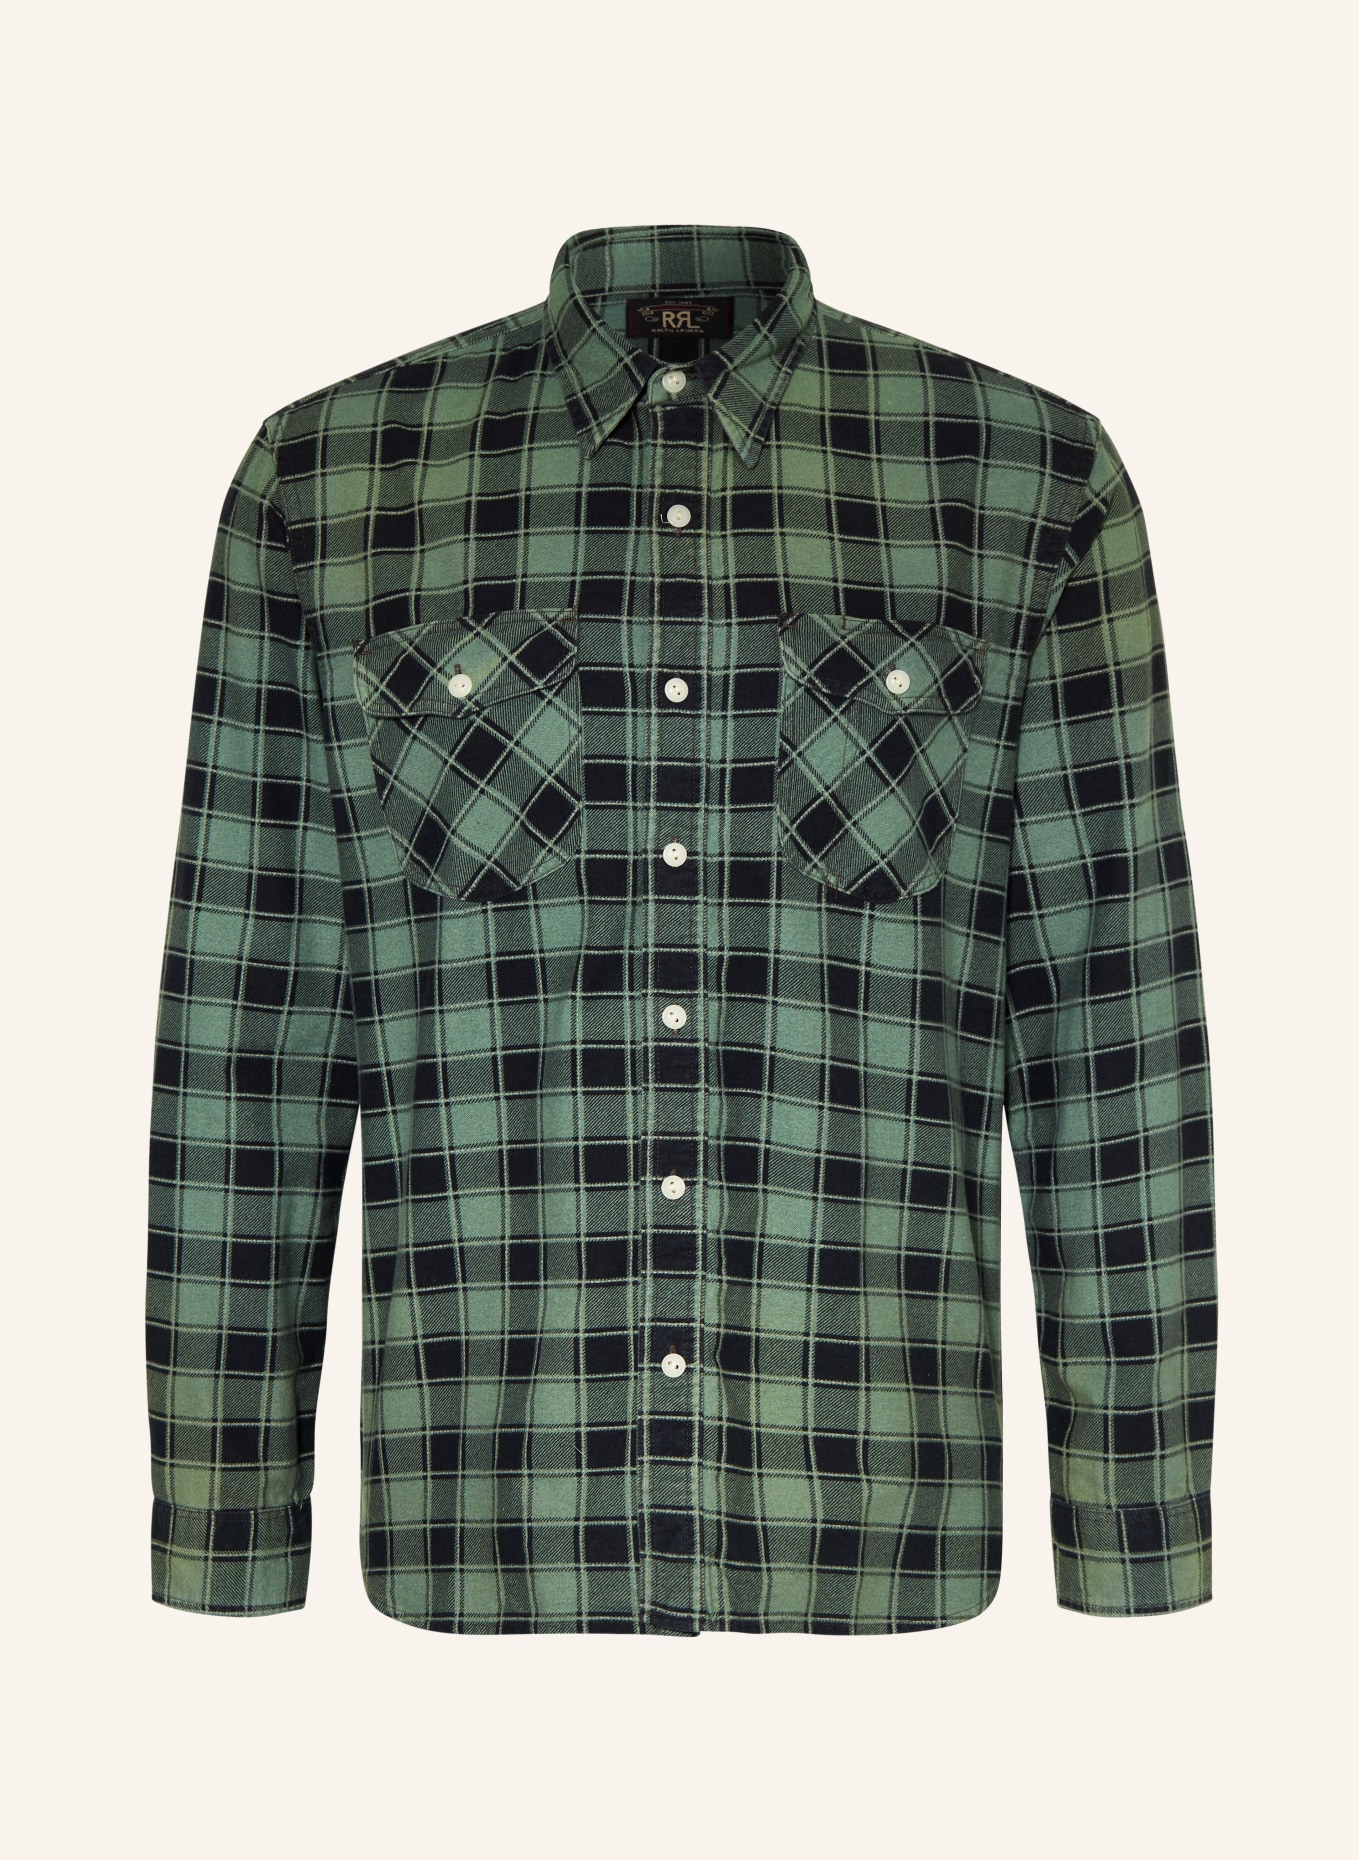 RRL Flannel shirt comfort fit in black/ green